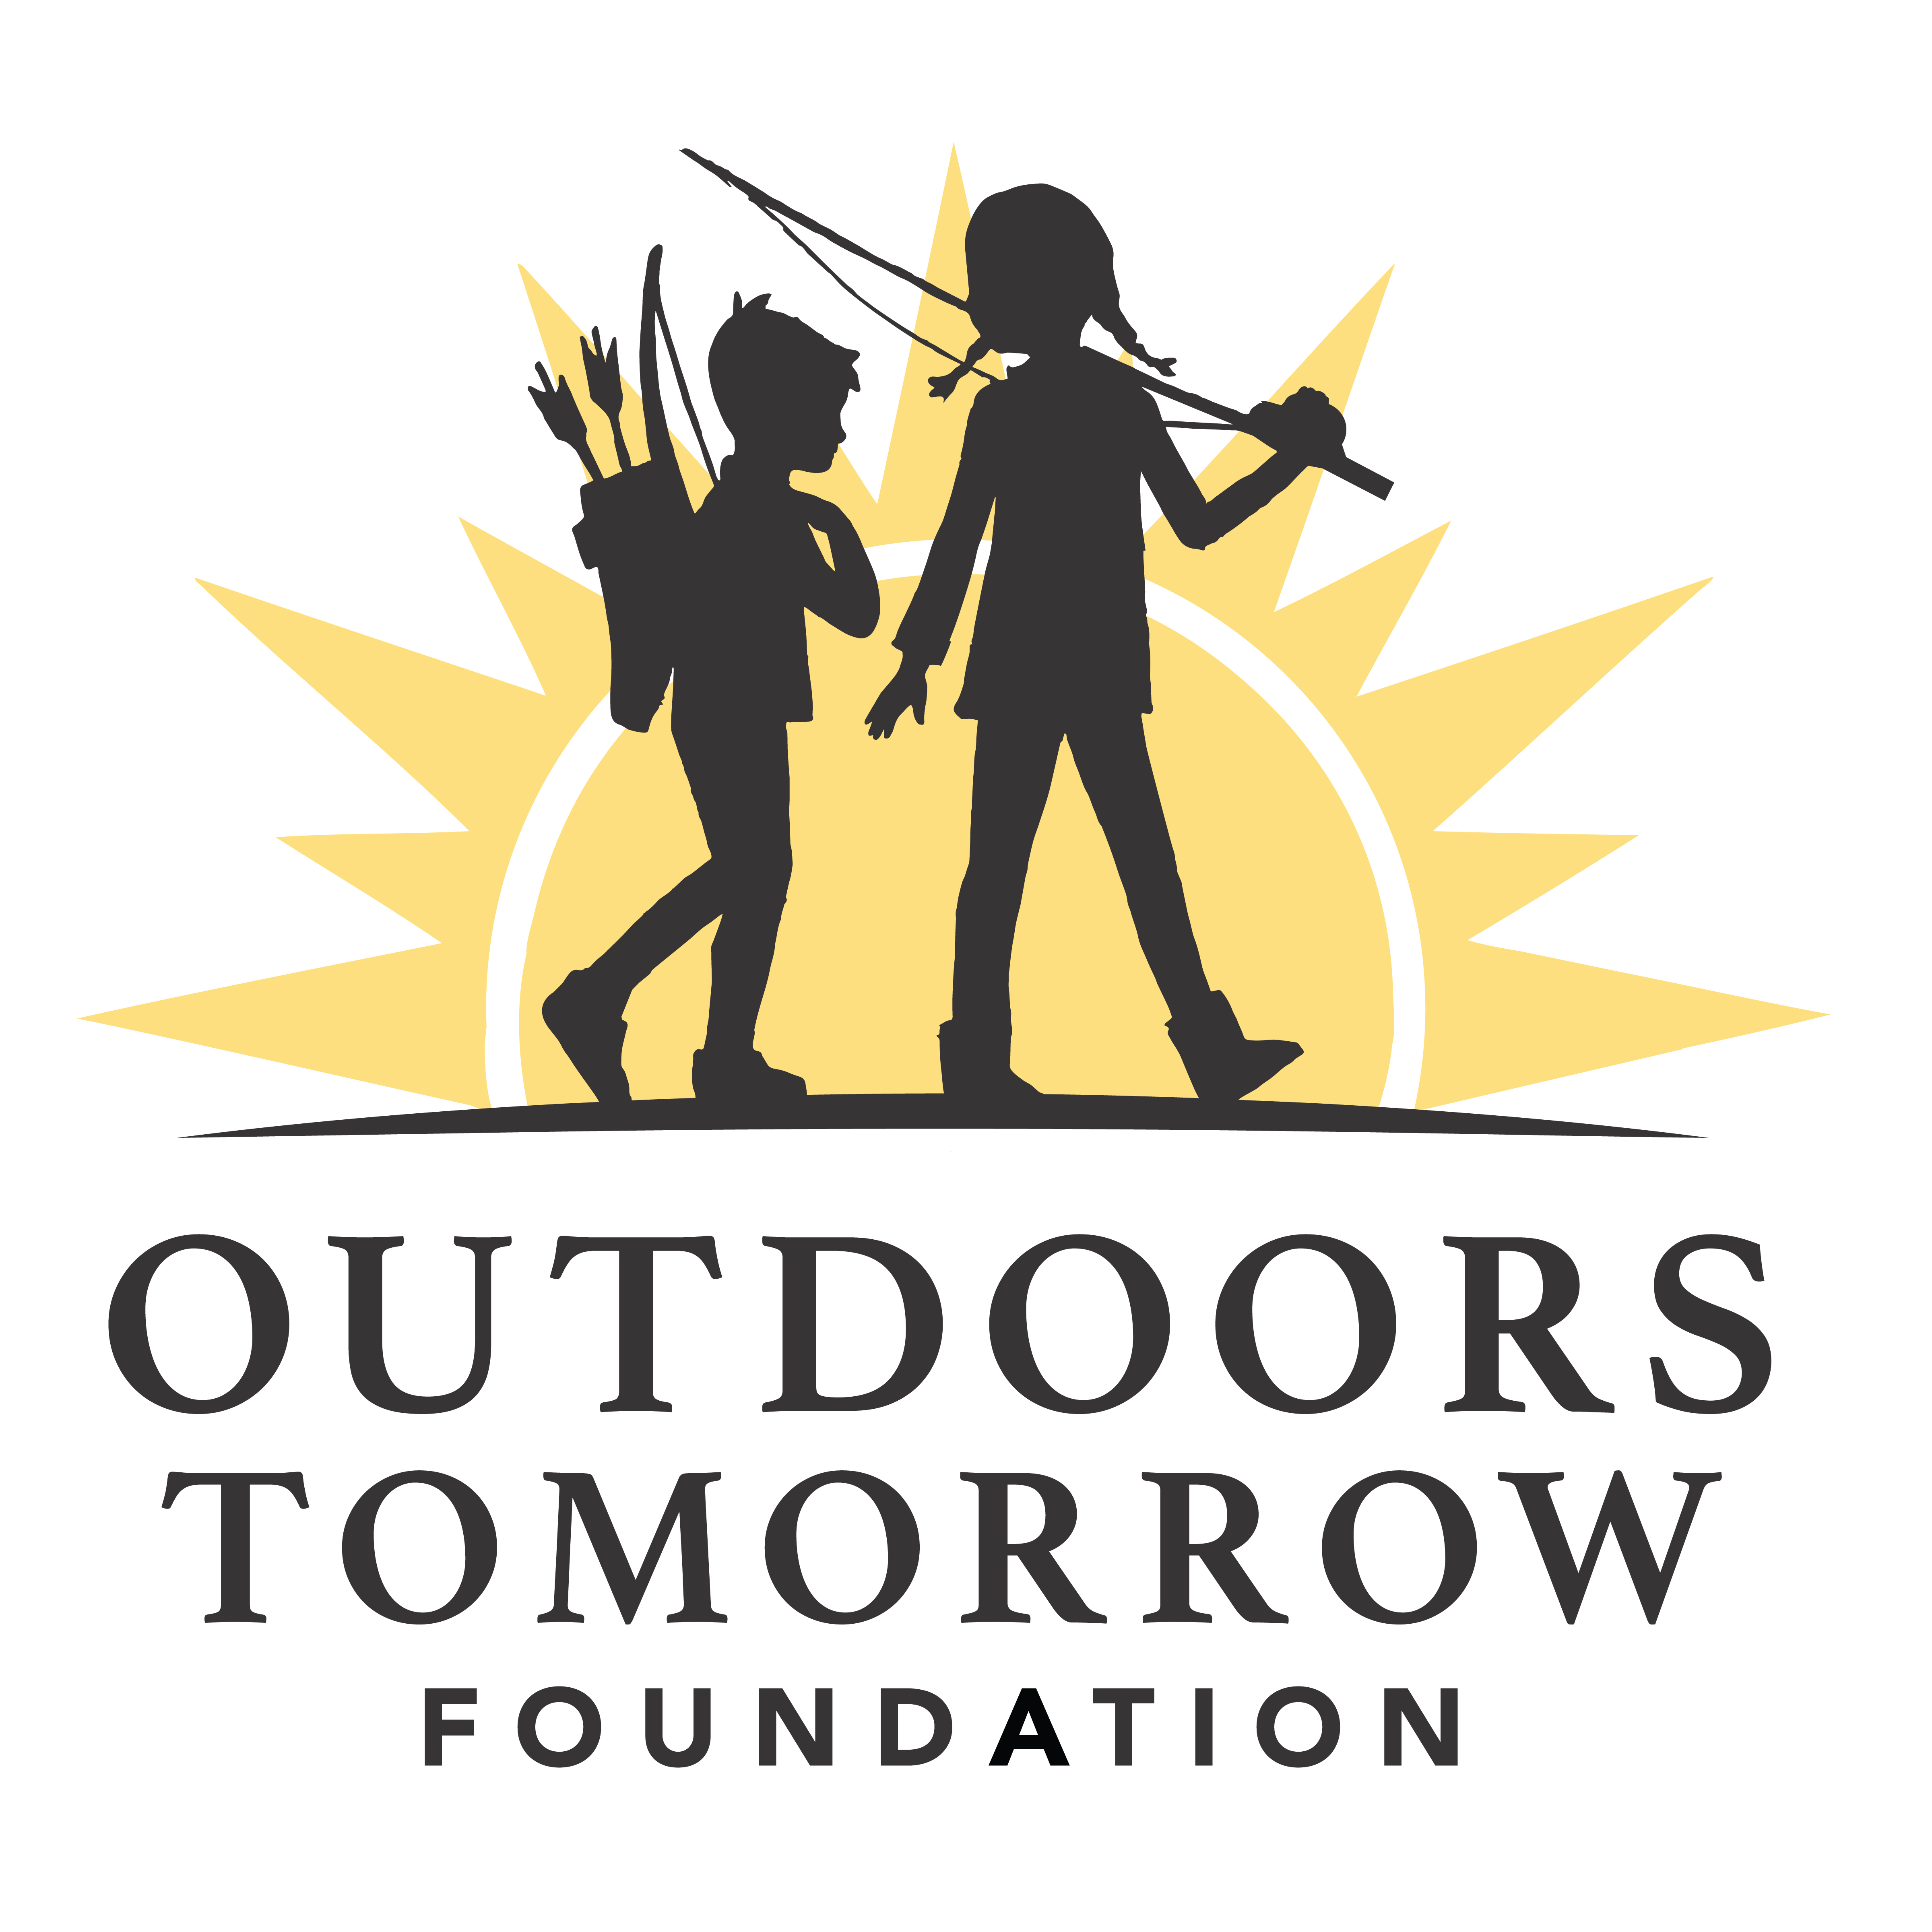 Outdoors Tomorrow Foundation Names New Chairman